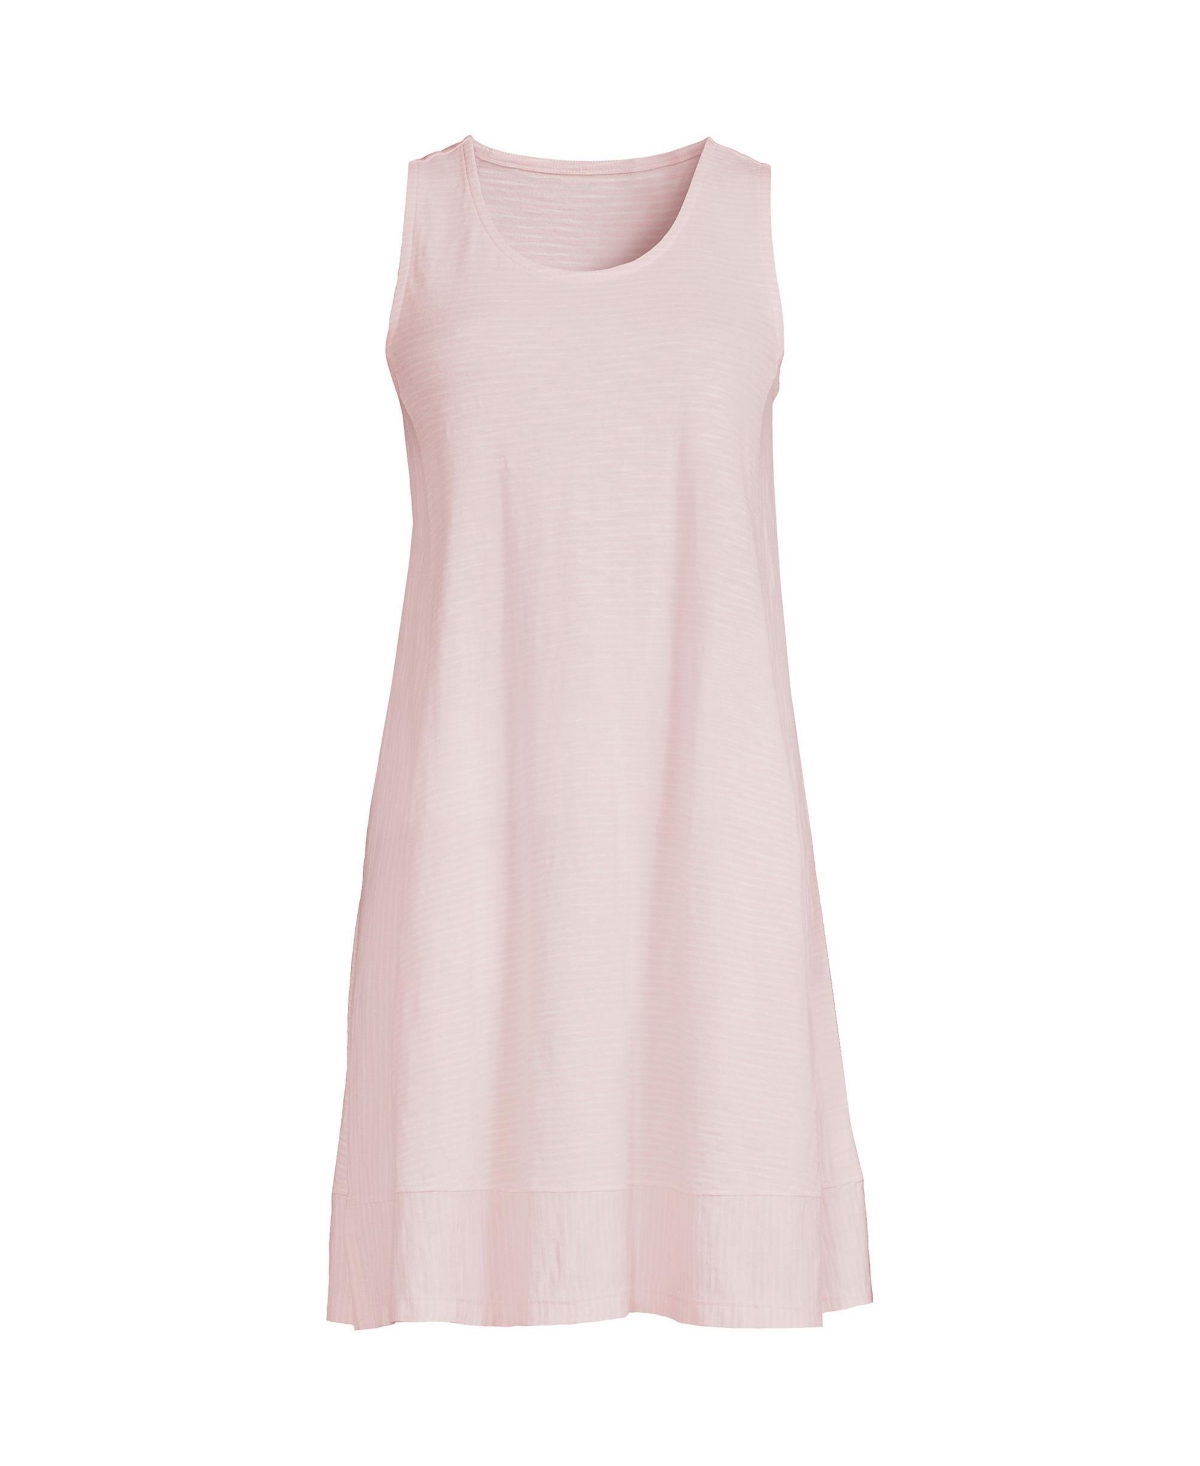 Women's Cotton Slub Tank Dress - Soft tea rose stripe